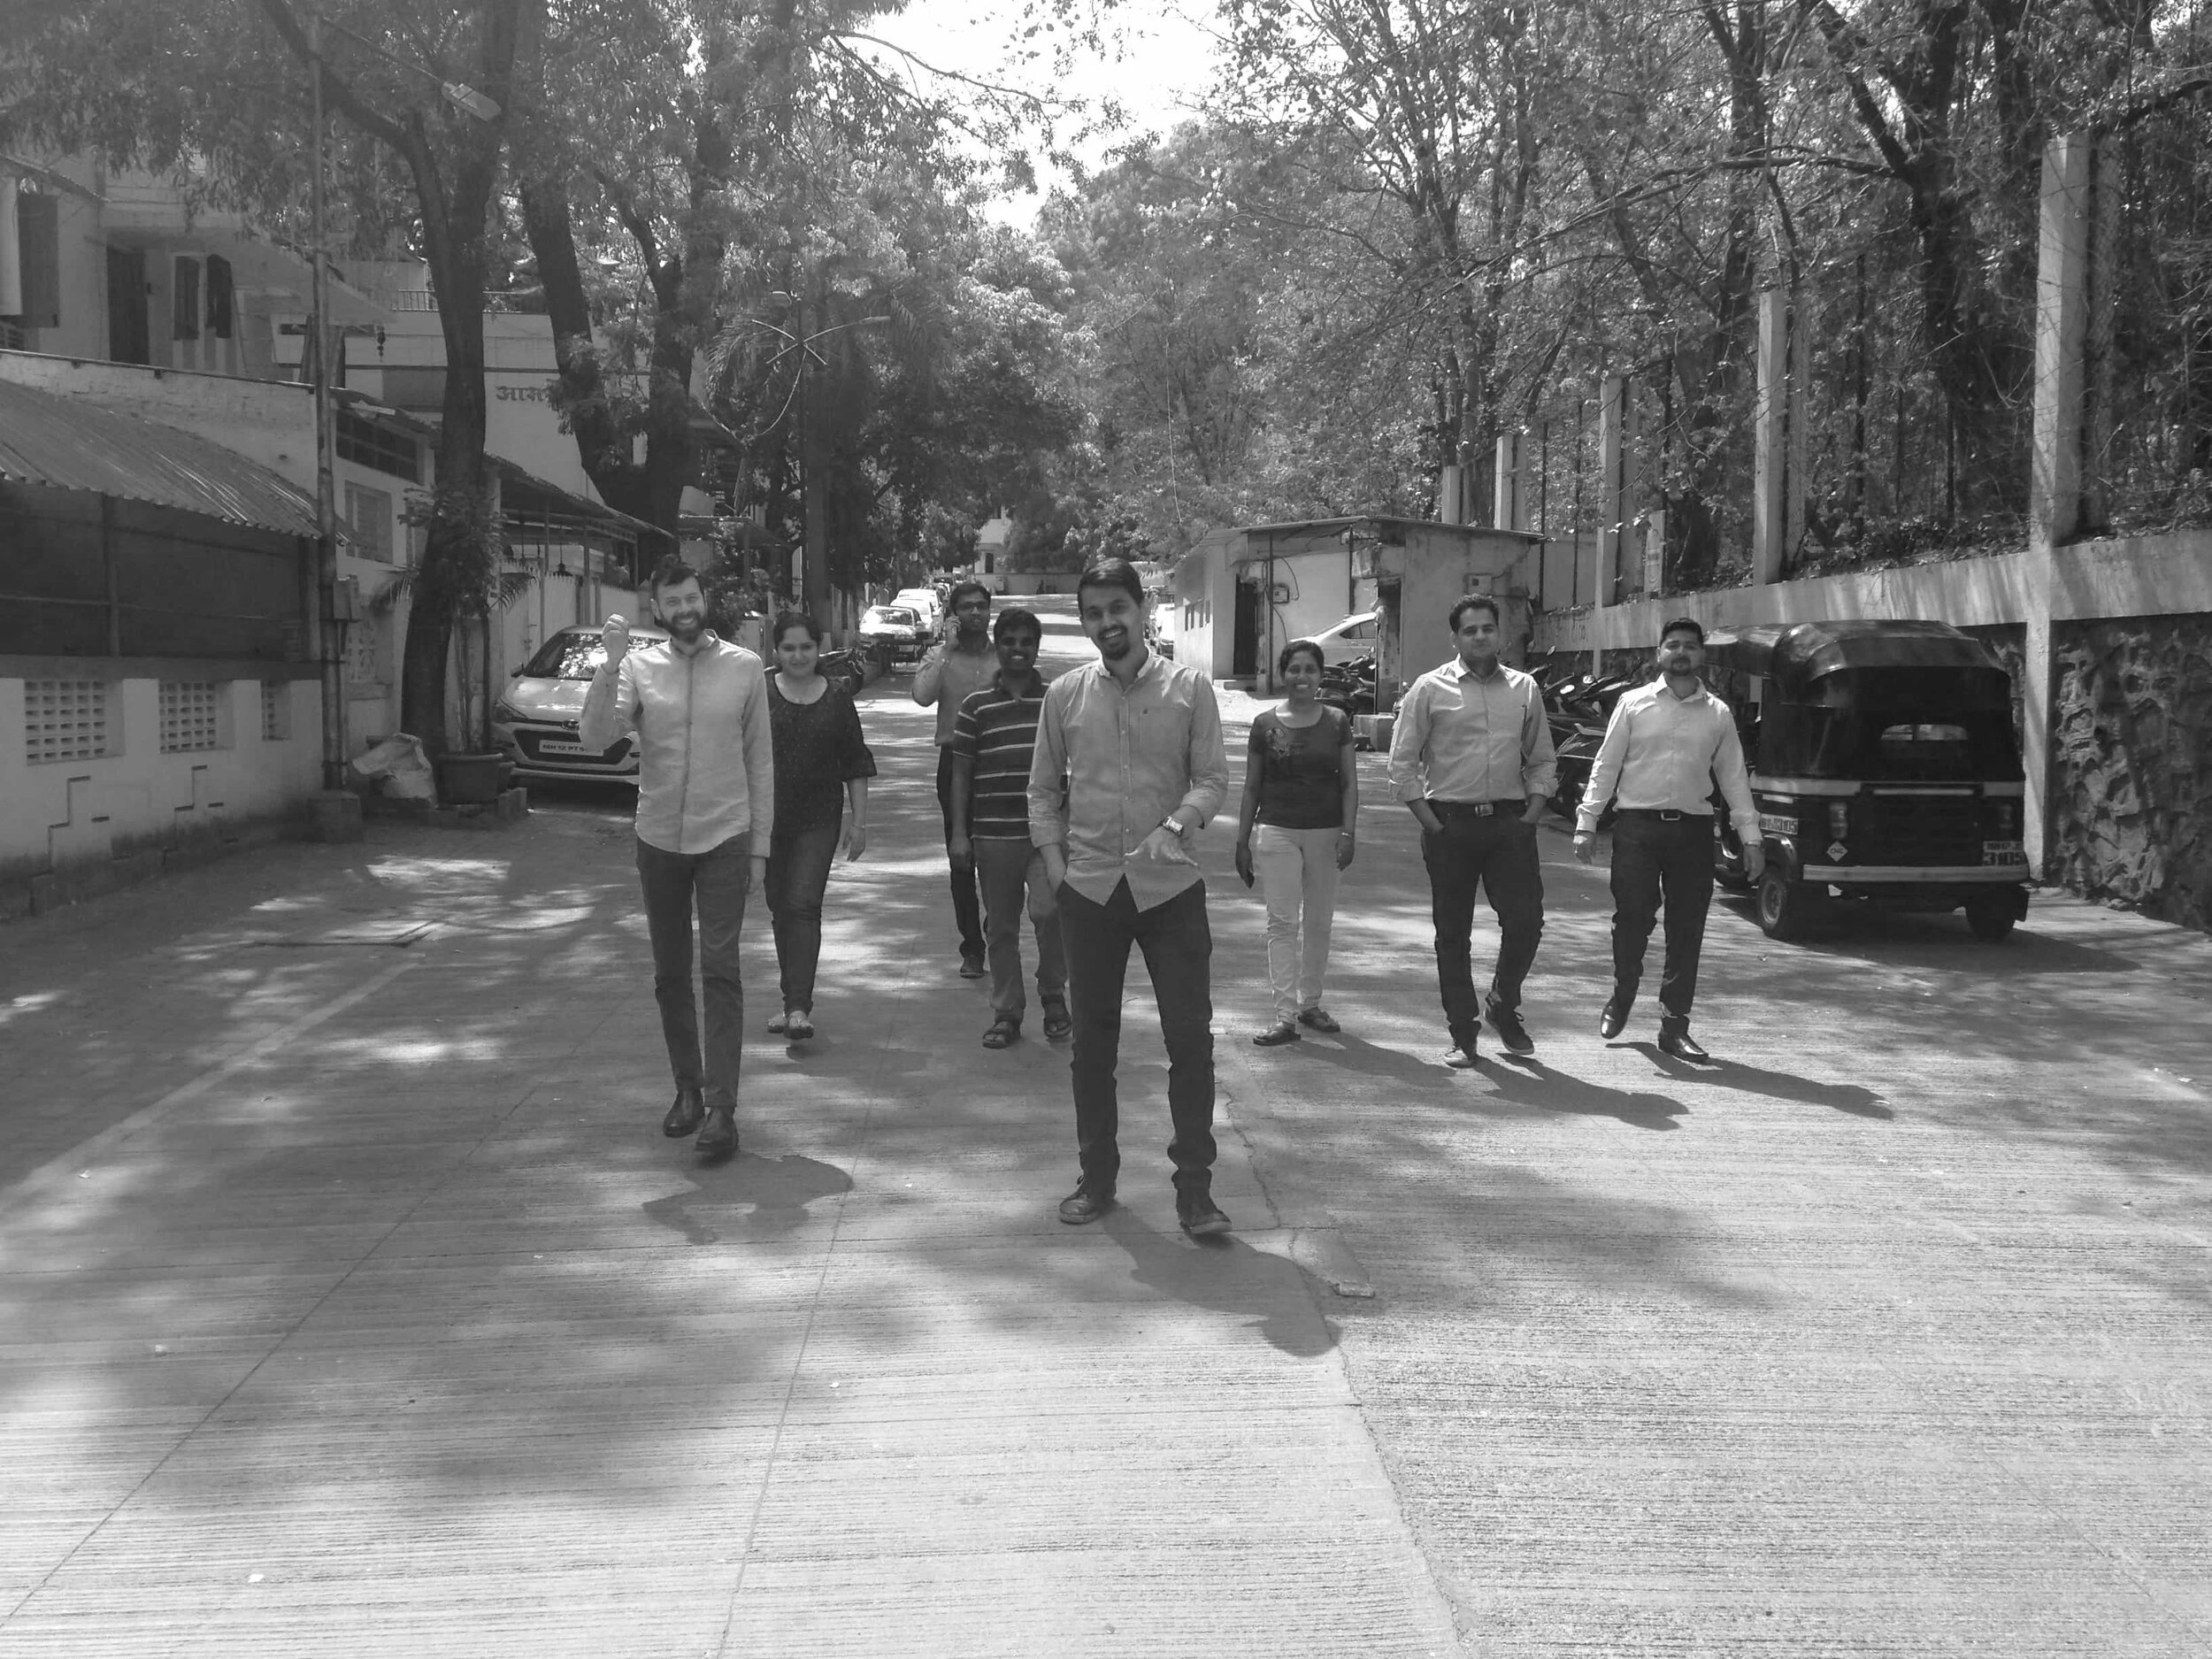 team posing on Indian street